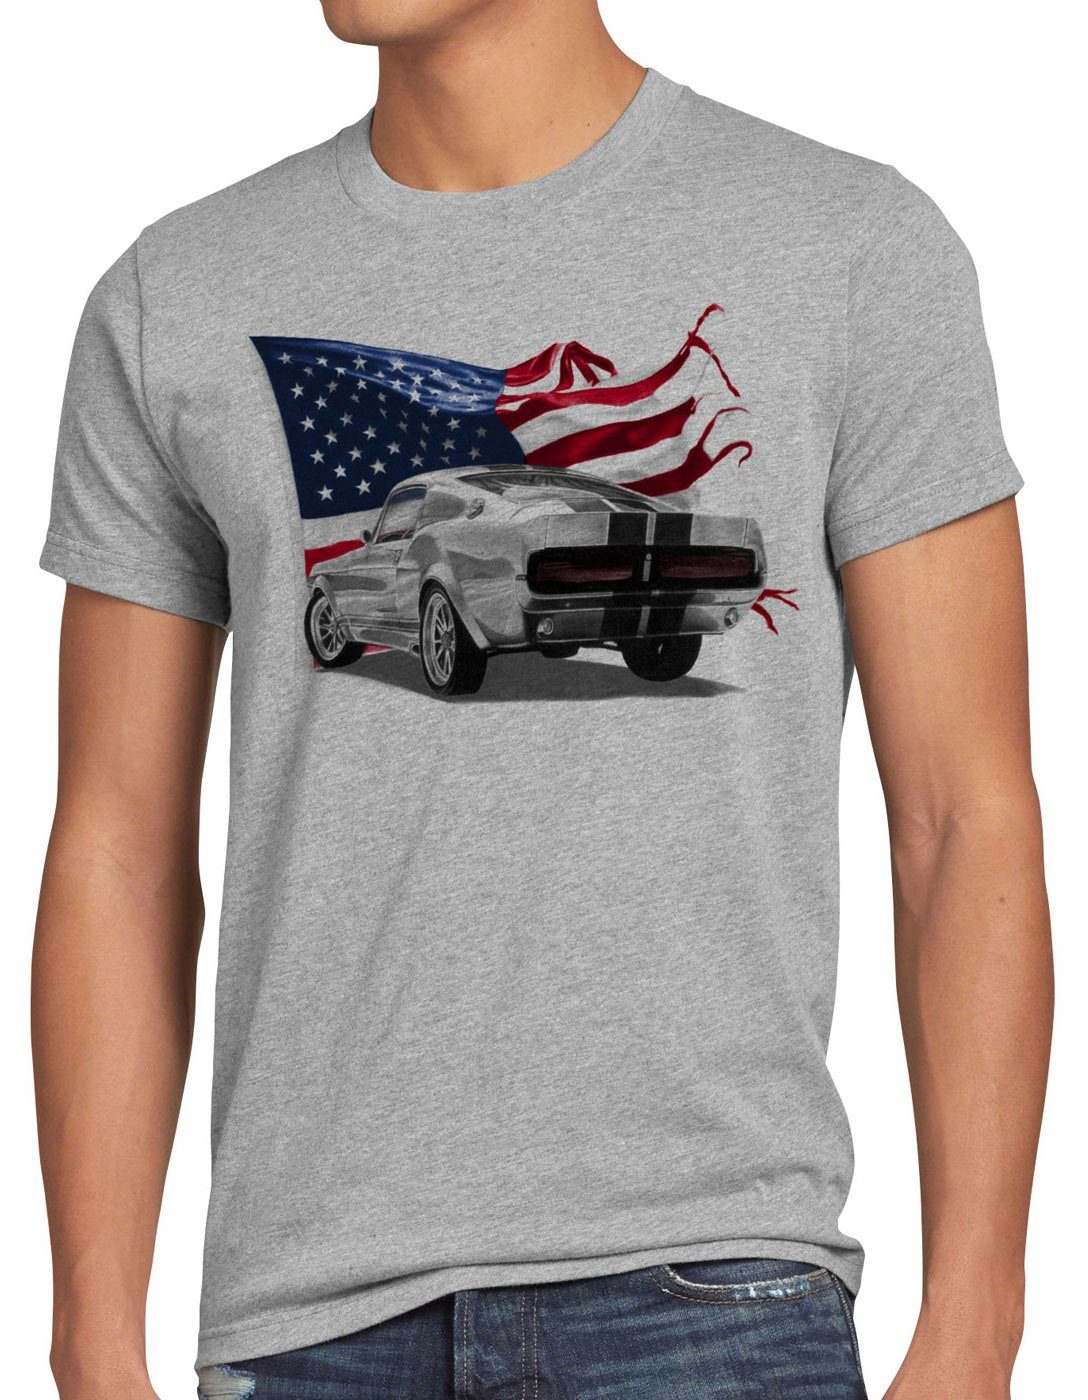 style3 Print-Shirt Herren T-Shirt Stars and Stripes Muscle Car eleanor mustang grau meliert